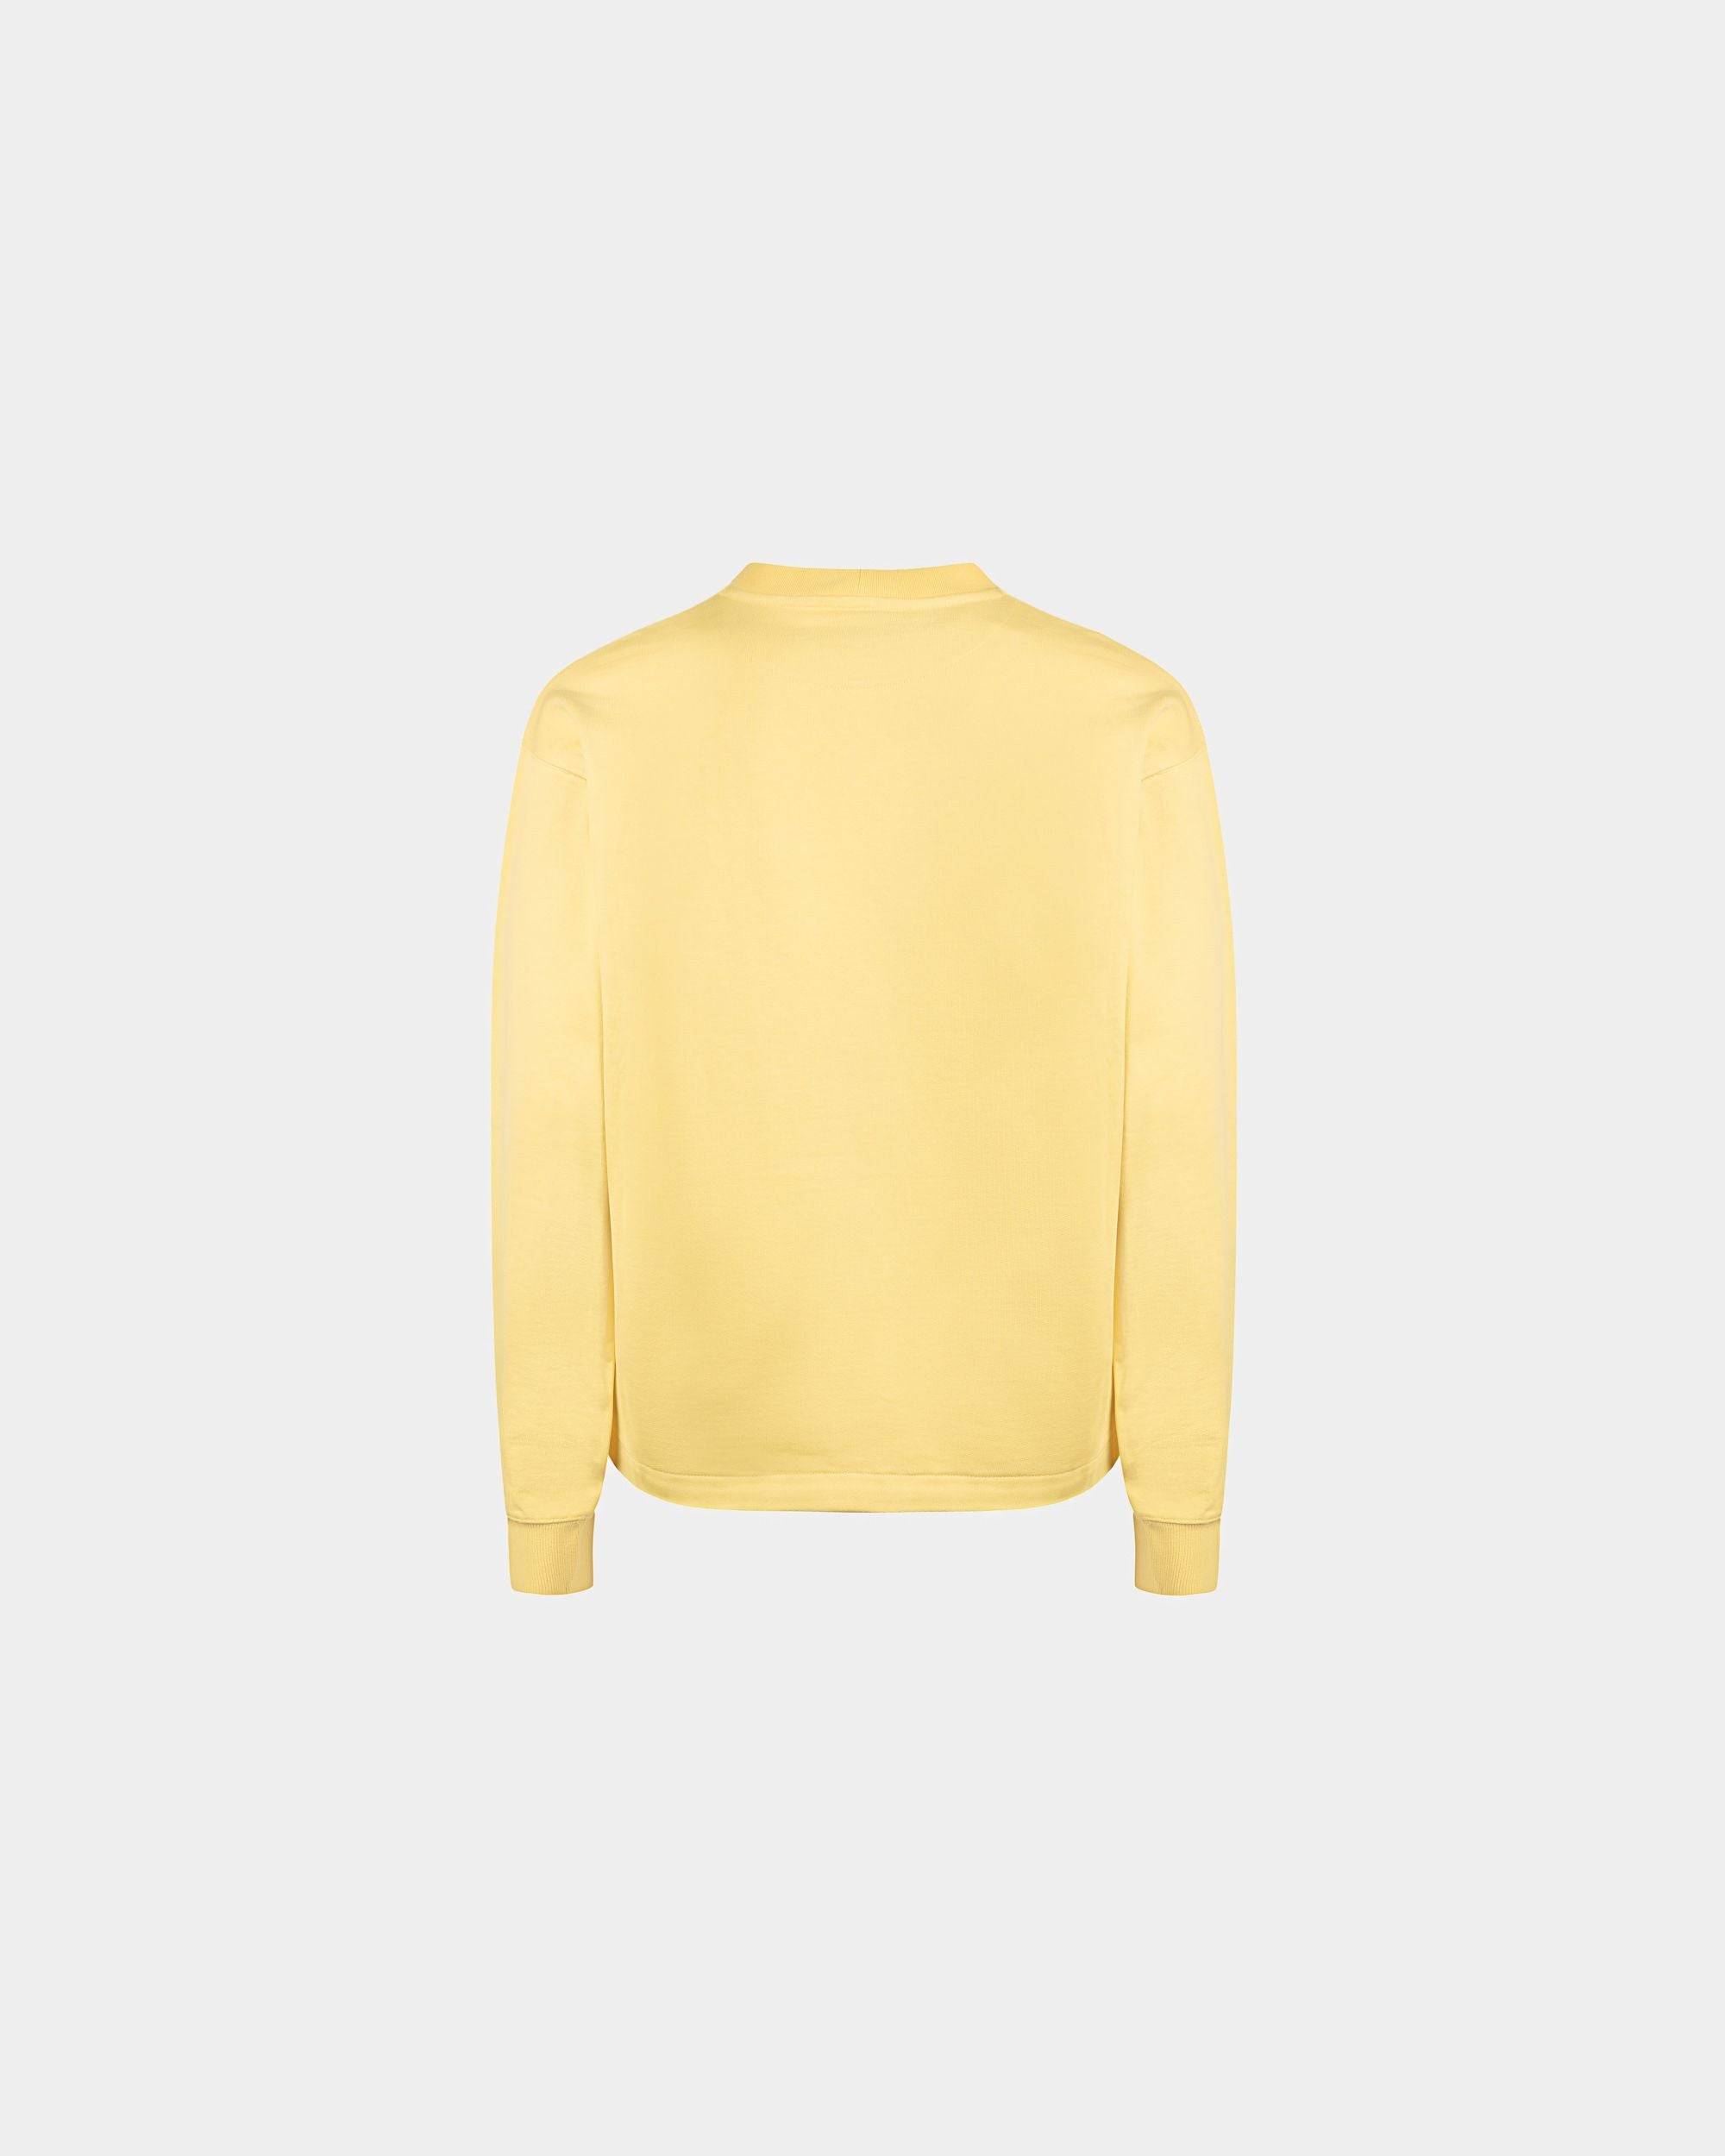 Men's Sweatshirt in Yellow Cotton | Bally | Still Life Back